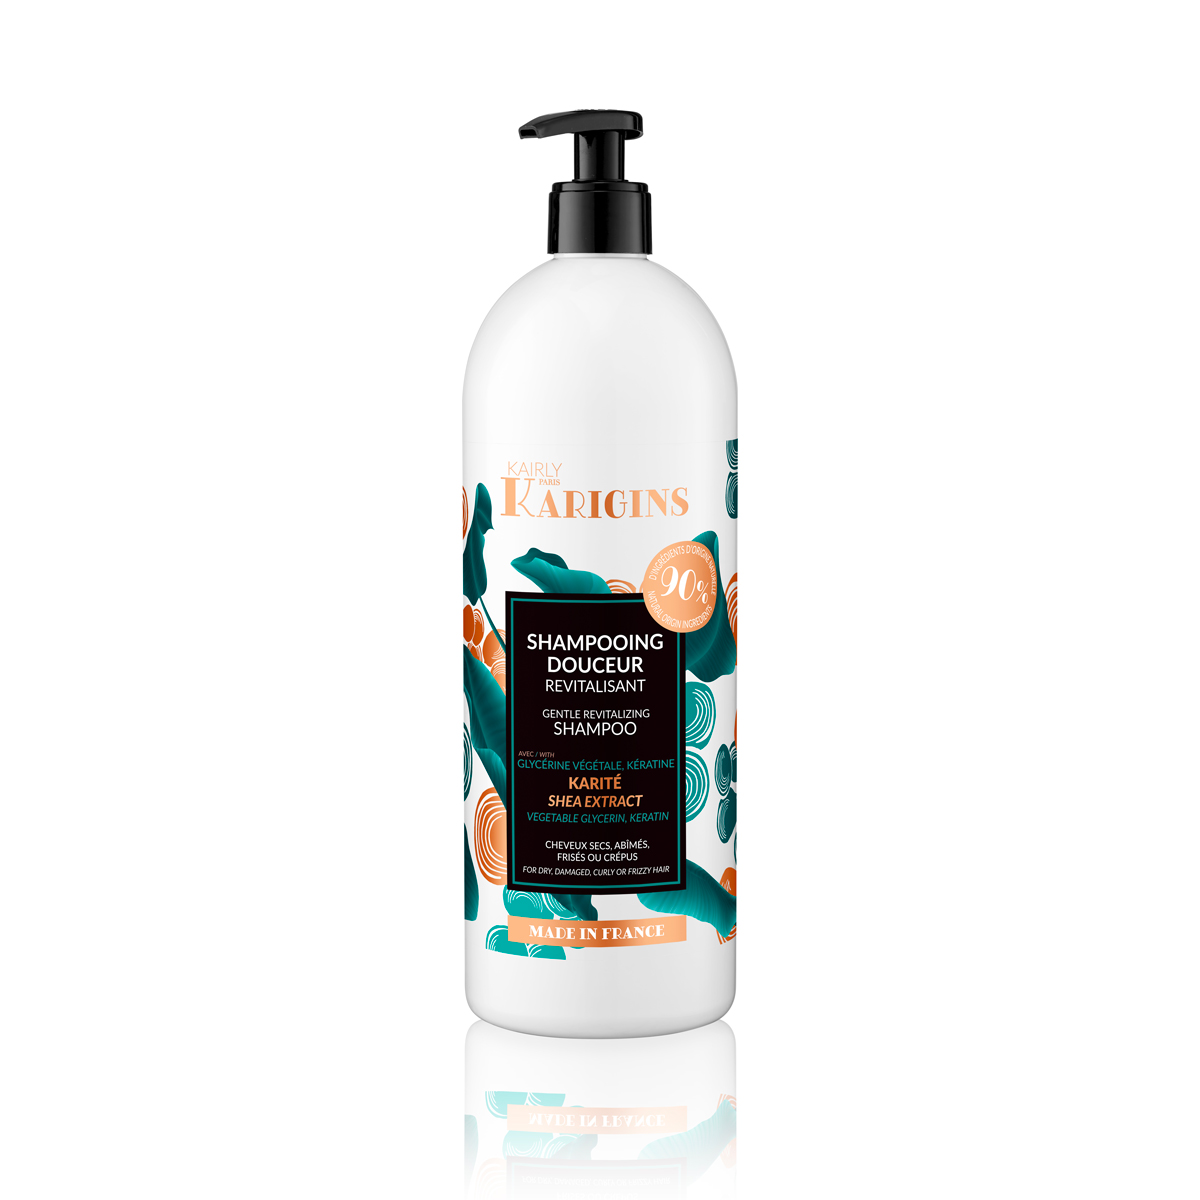 Gentle Revitalizing Shampoo | KARIGINS